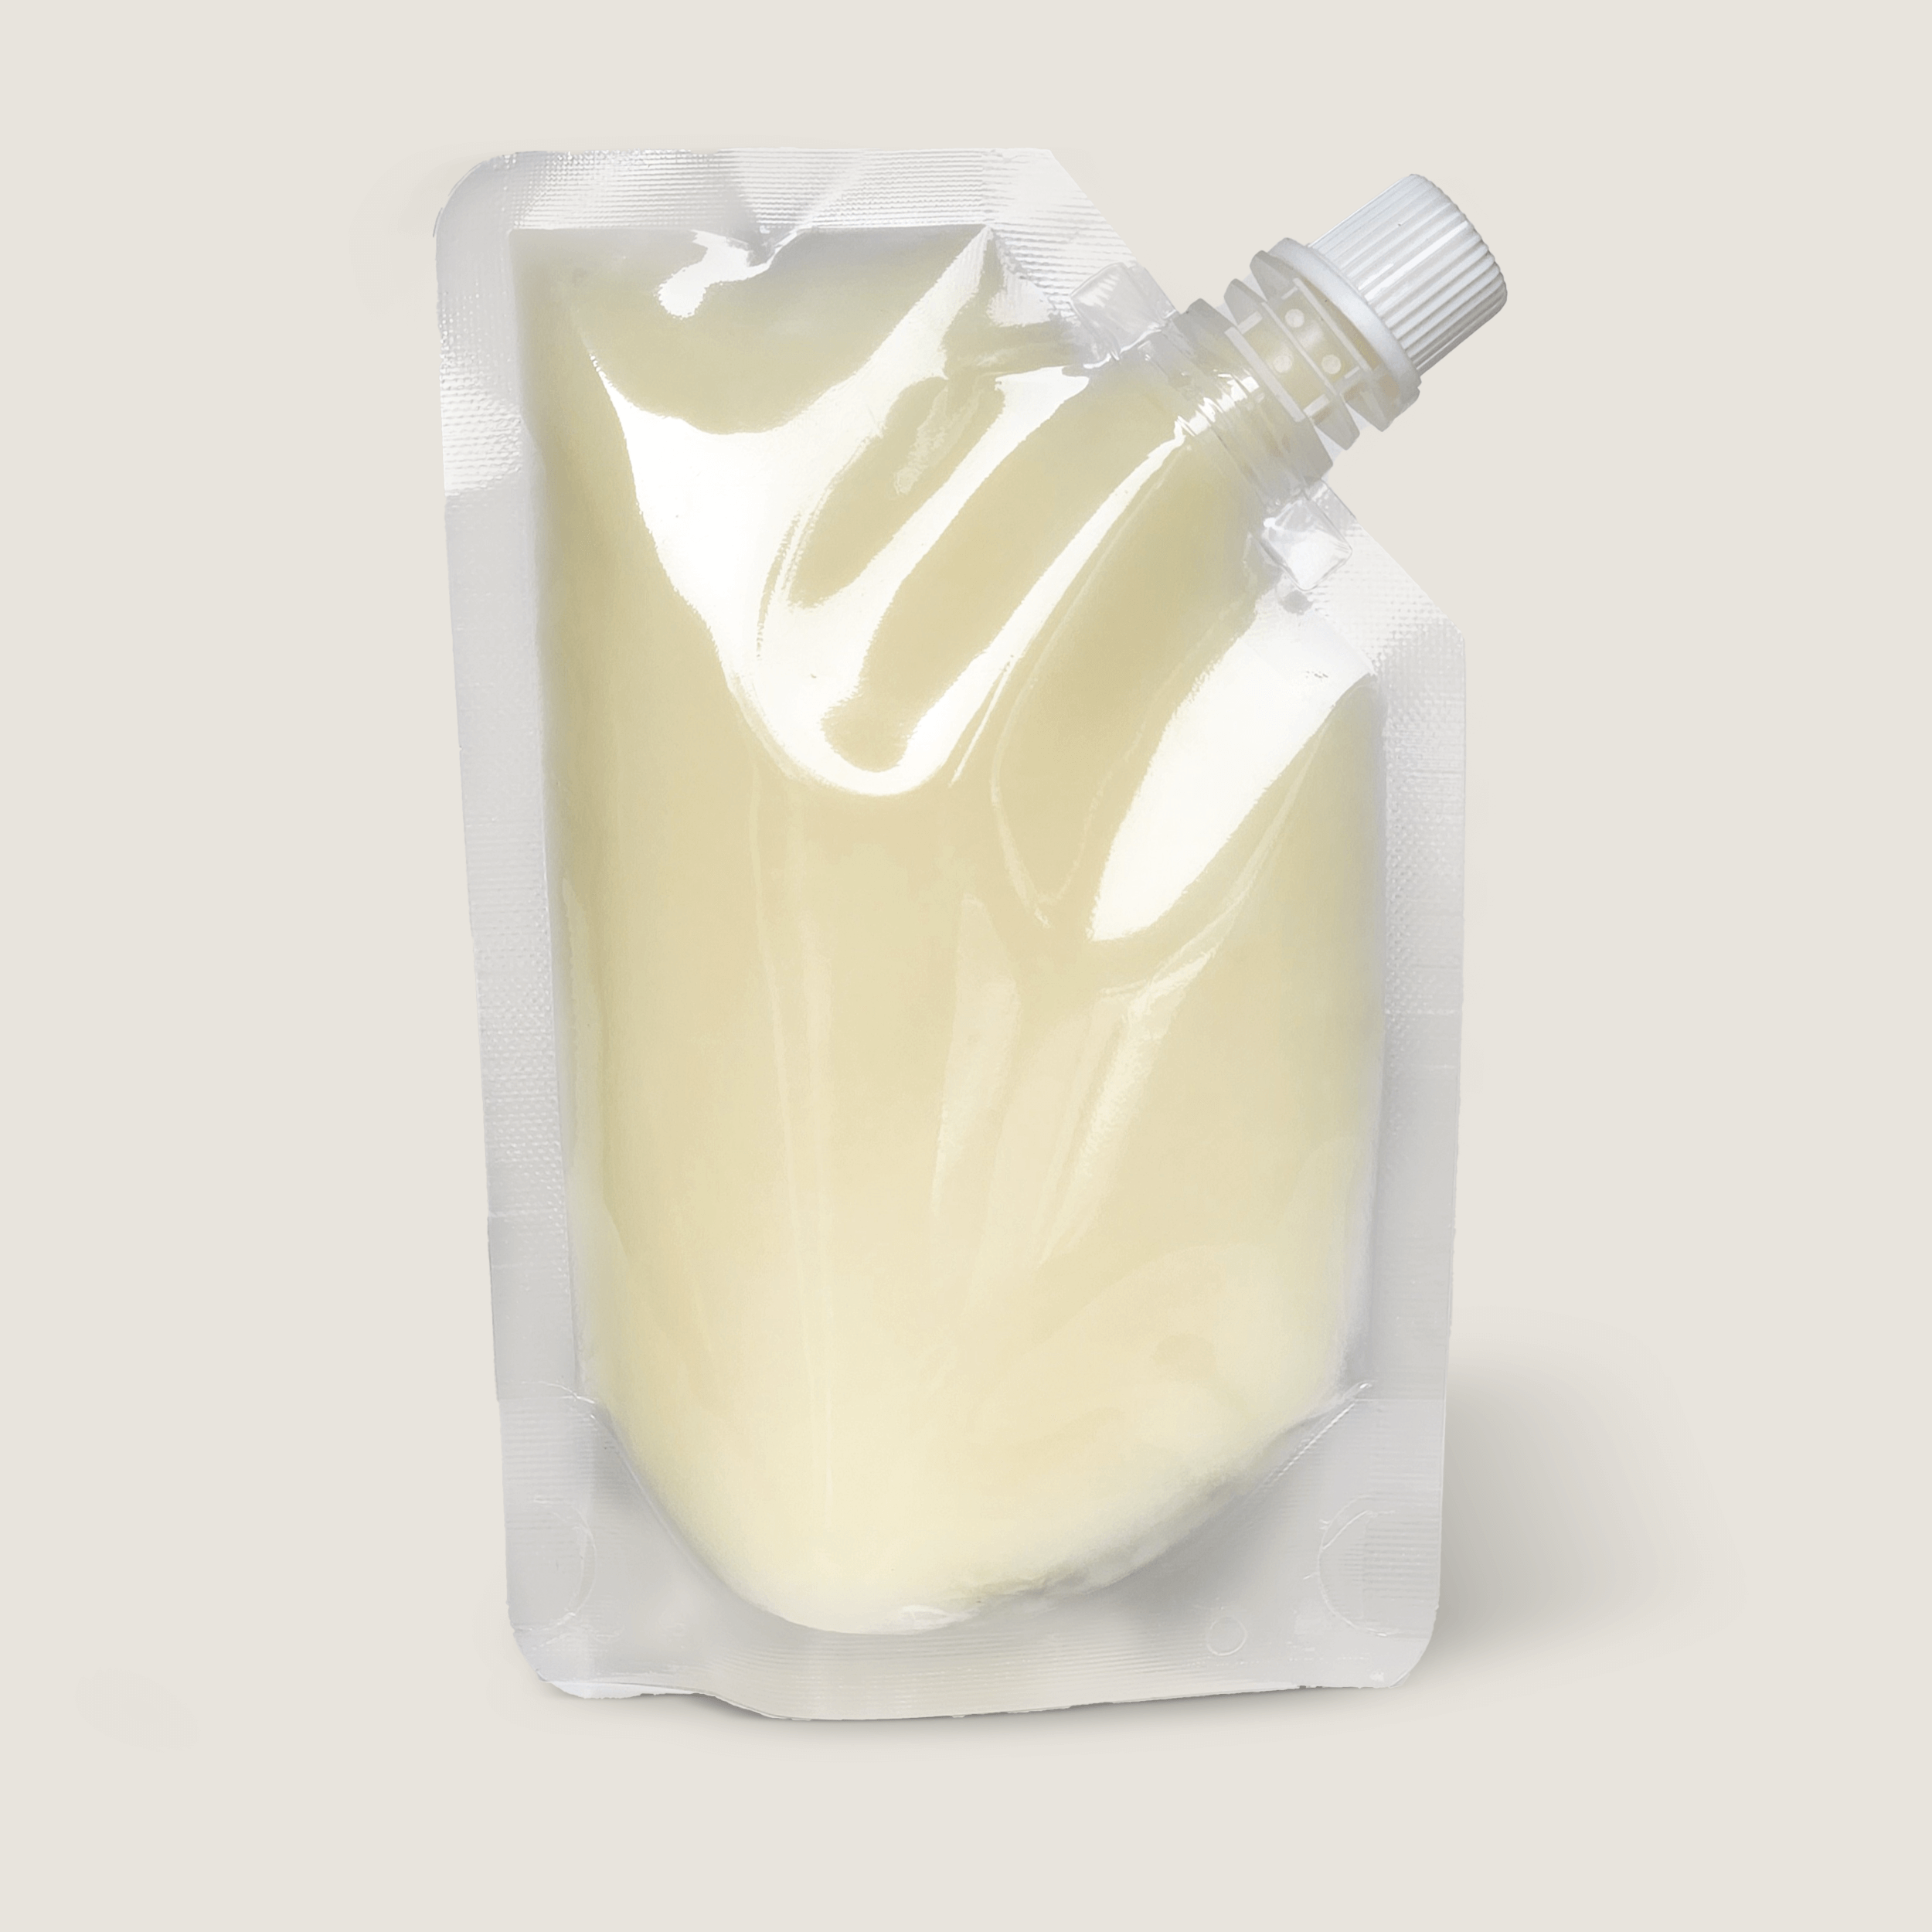 Scents Liquid Wax Melts/Squeeze Wax – Scents Candle Co.